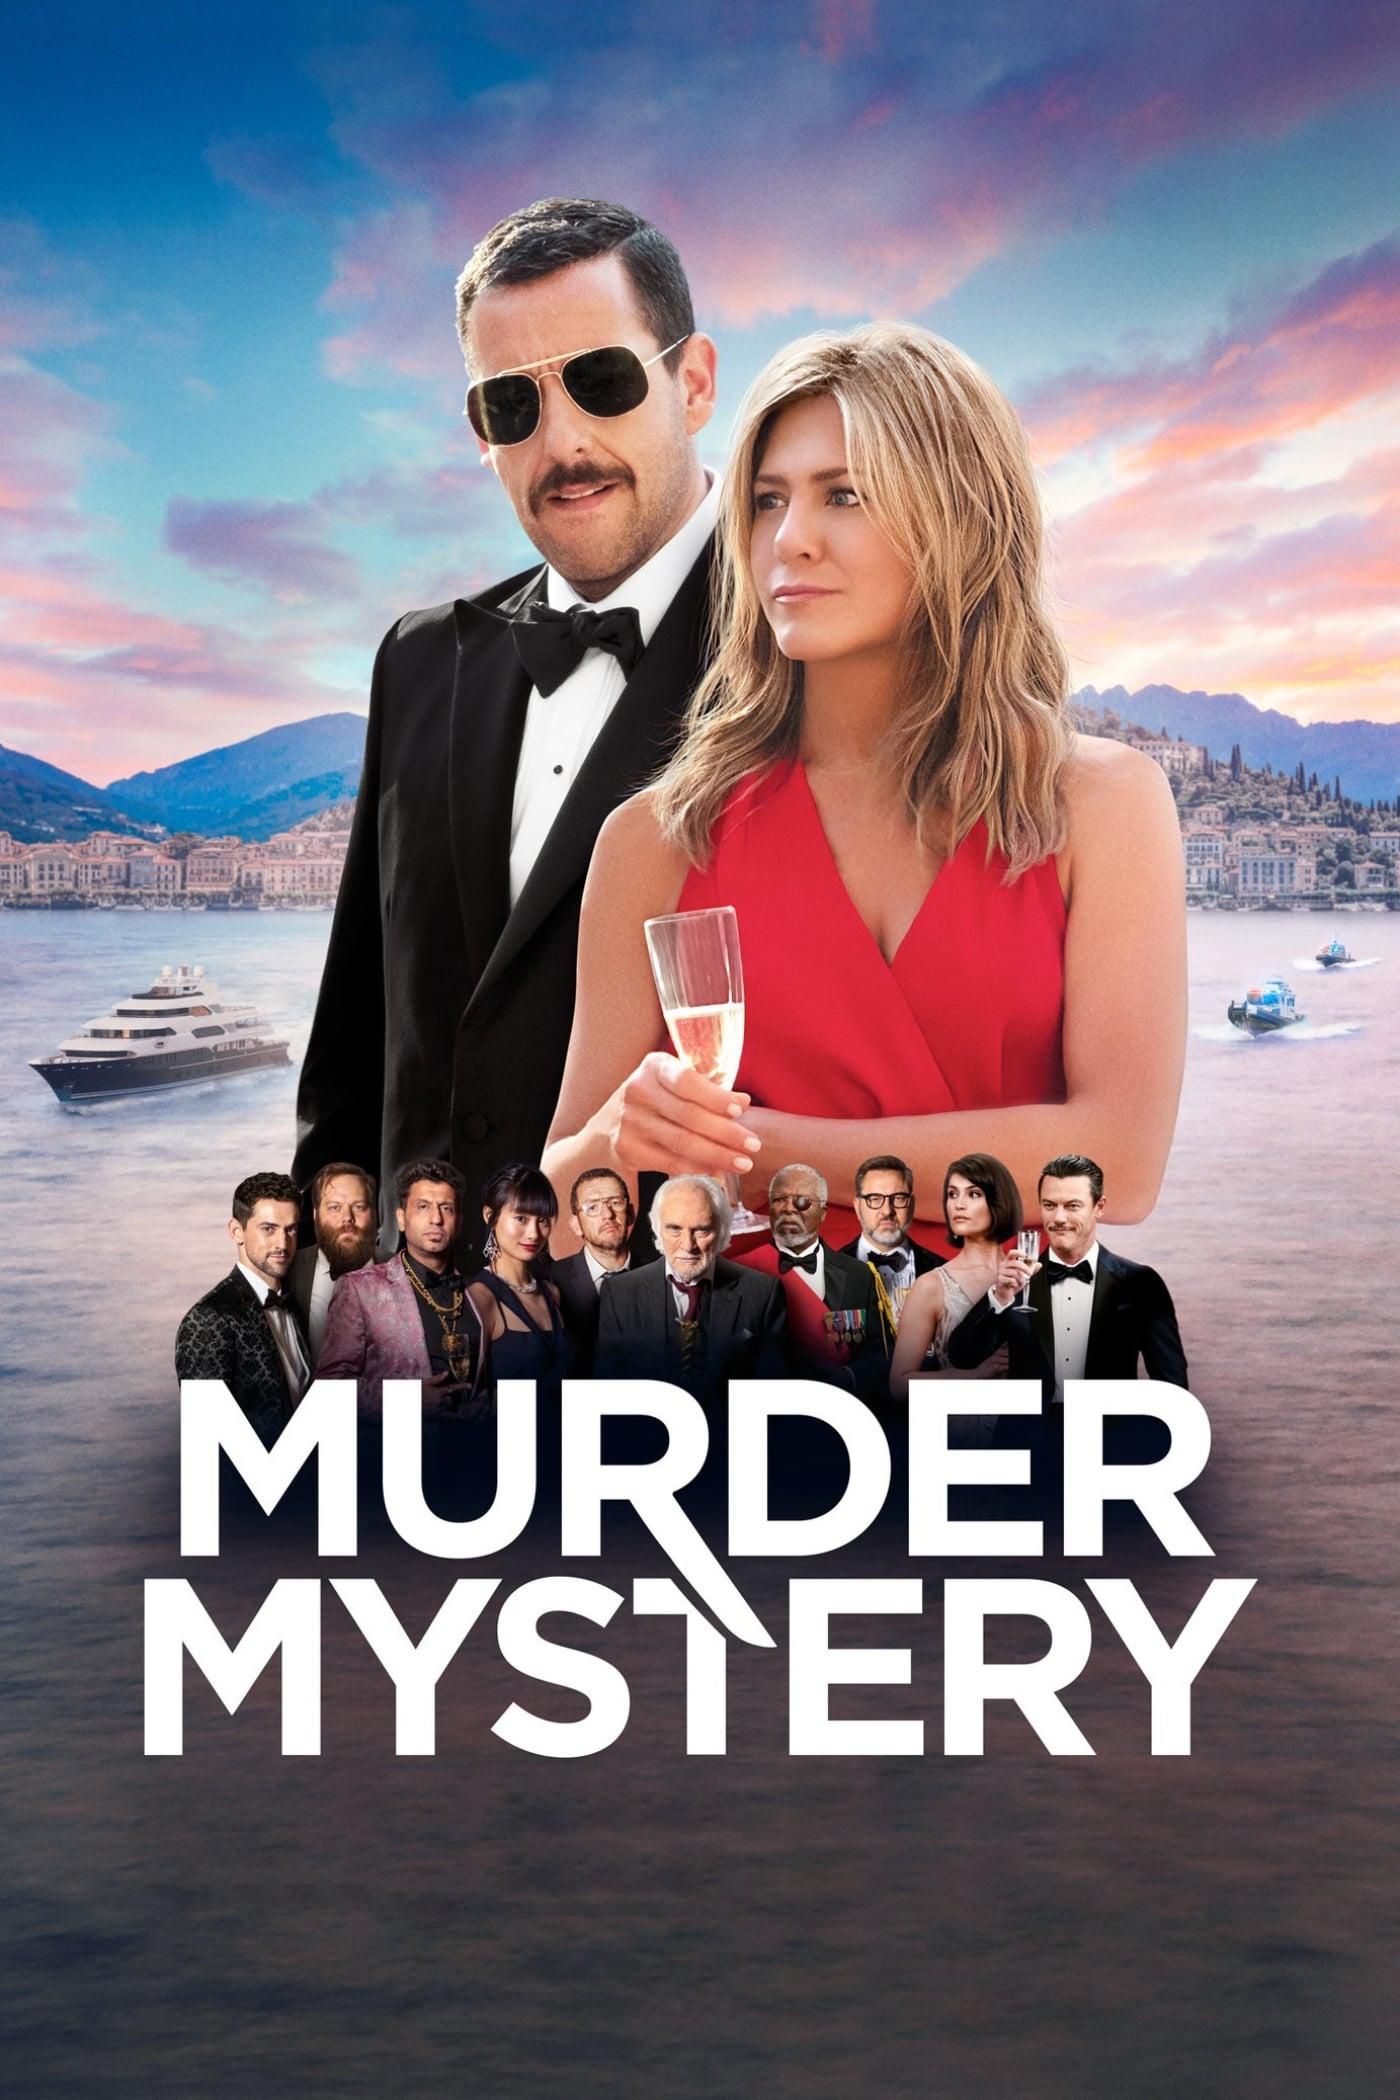 Murder Mystery, Trailer